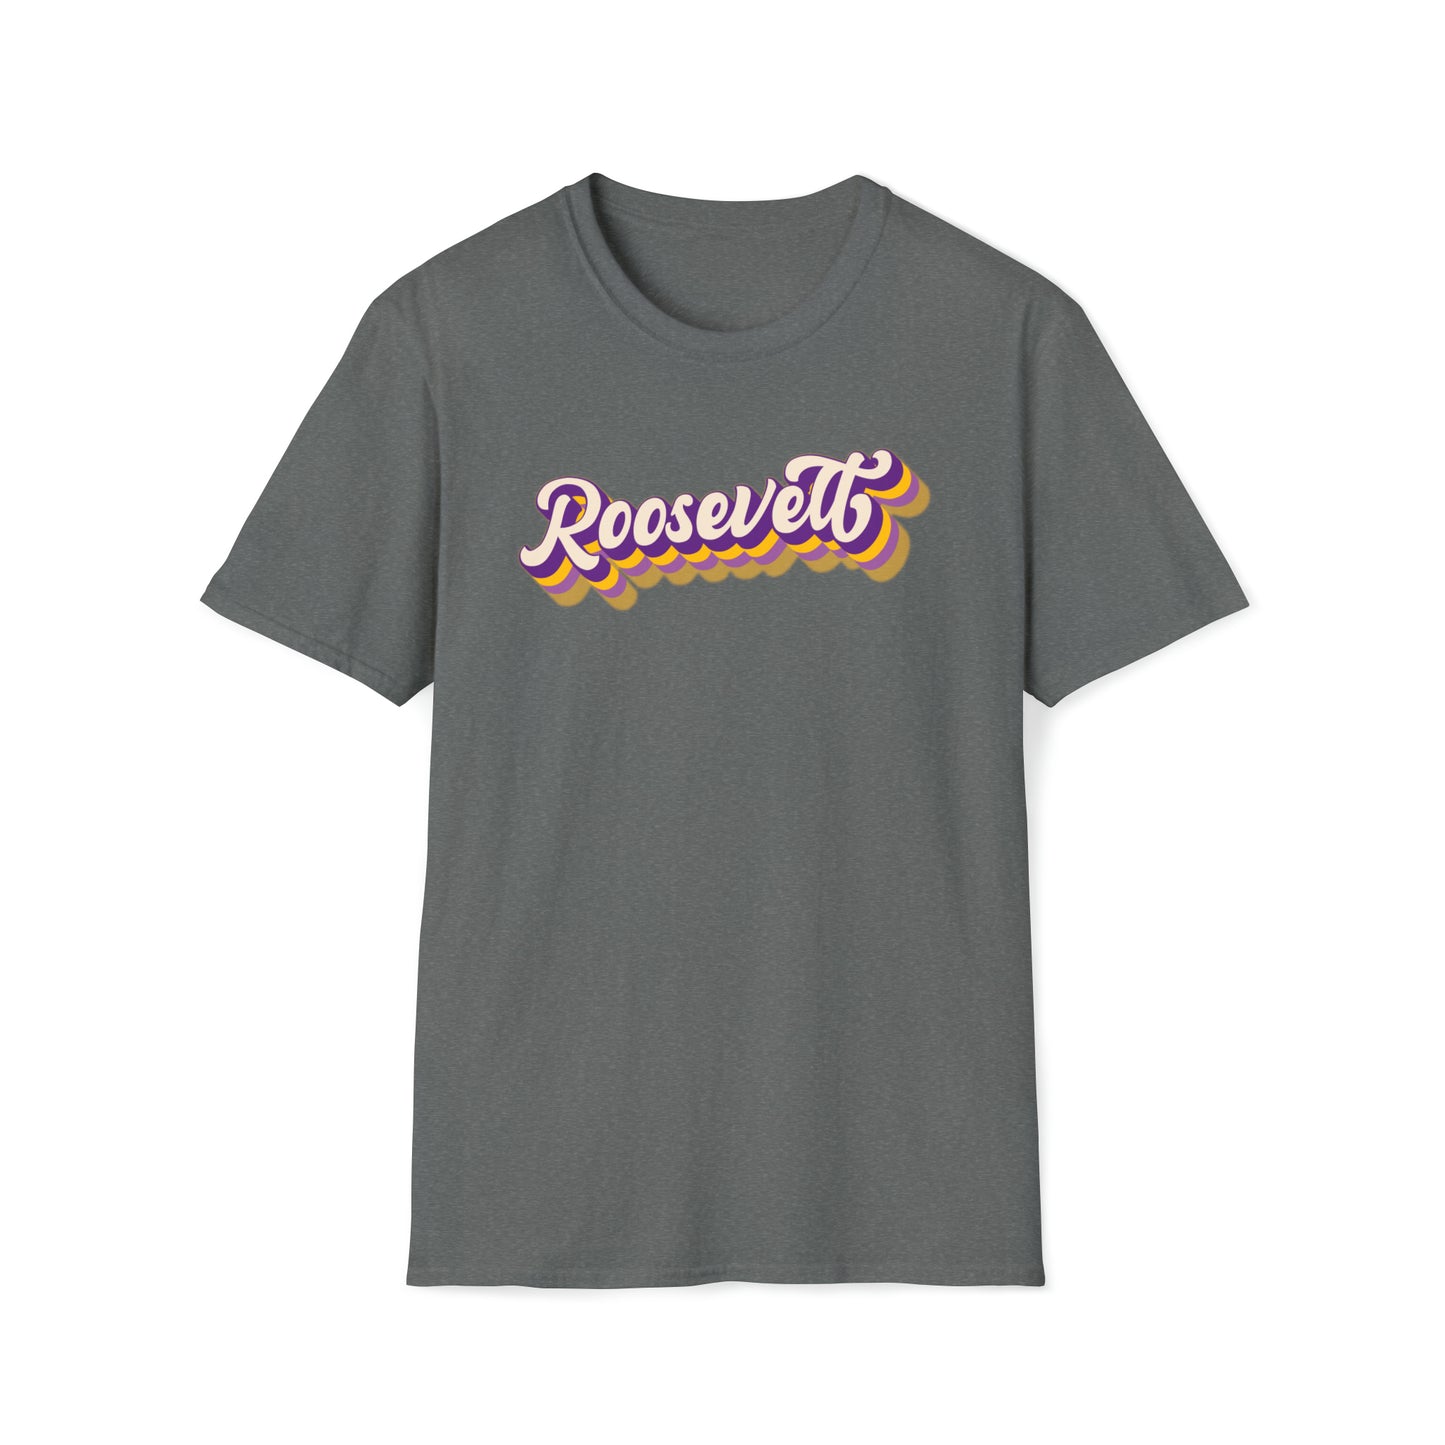 Roosevelt - Softstyle T-Shirt